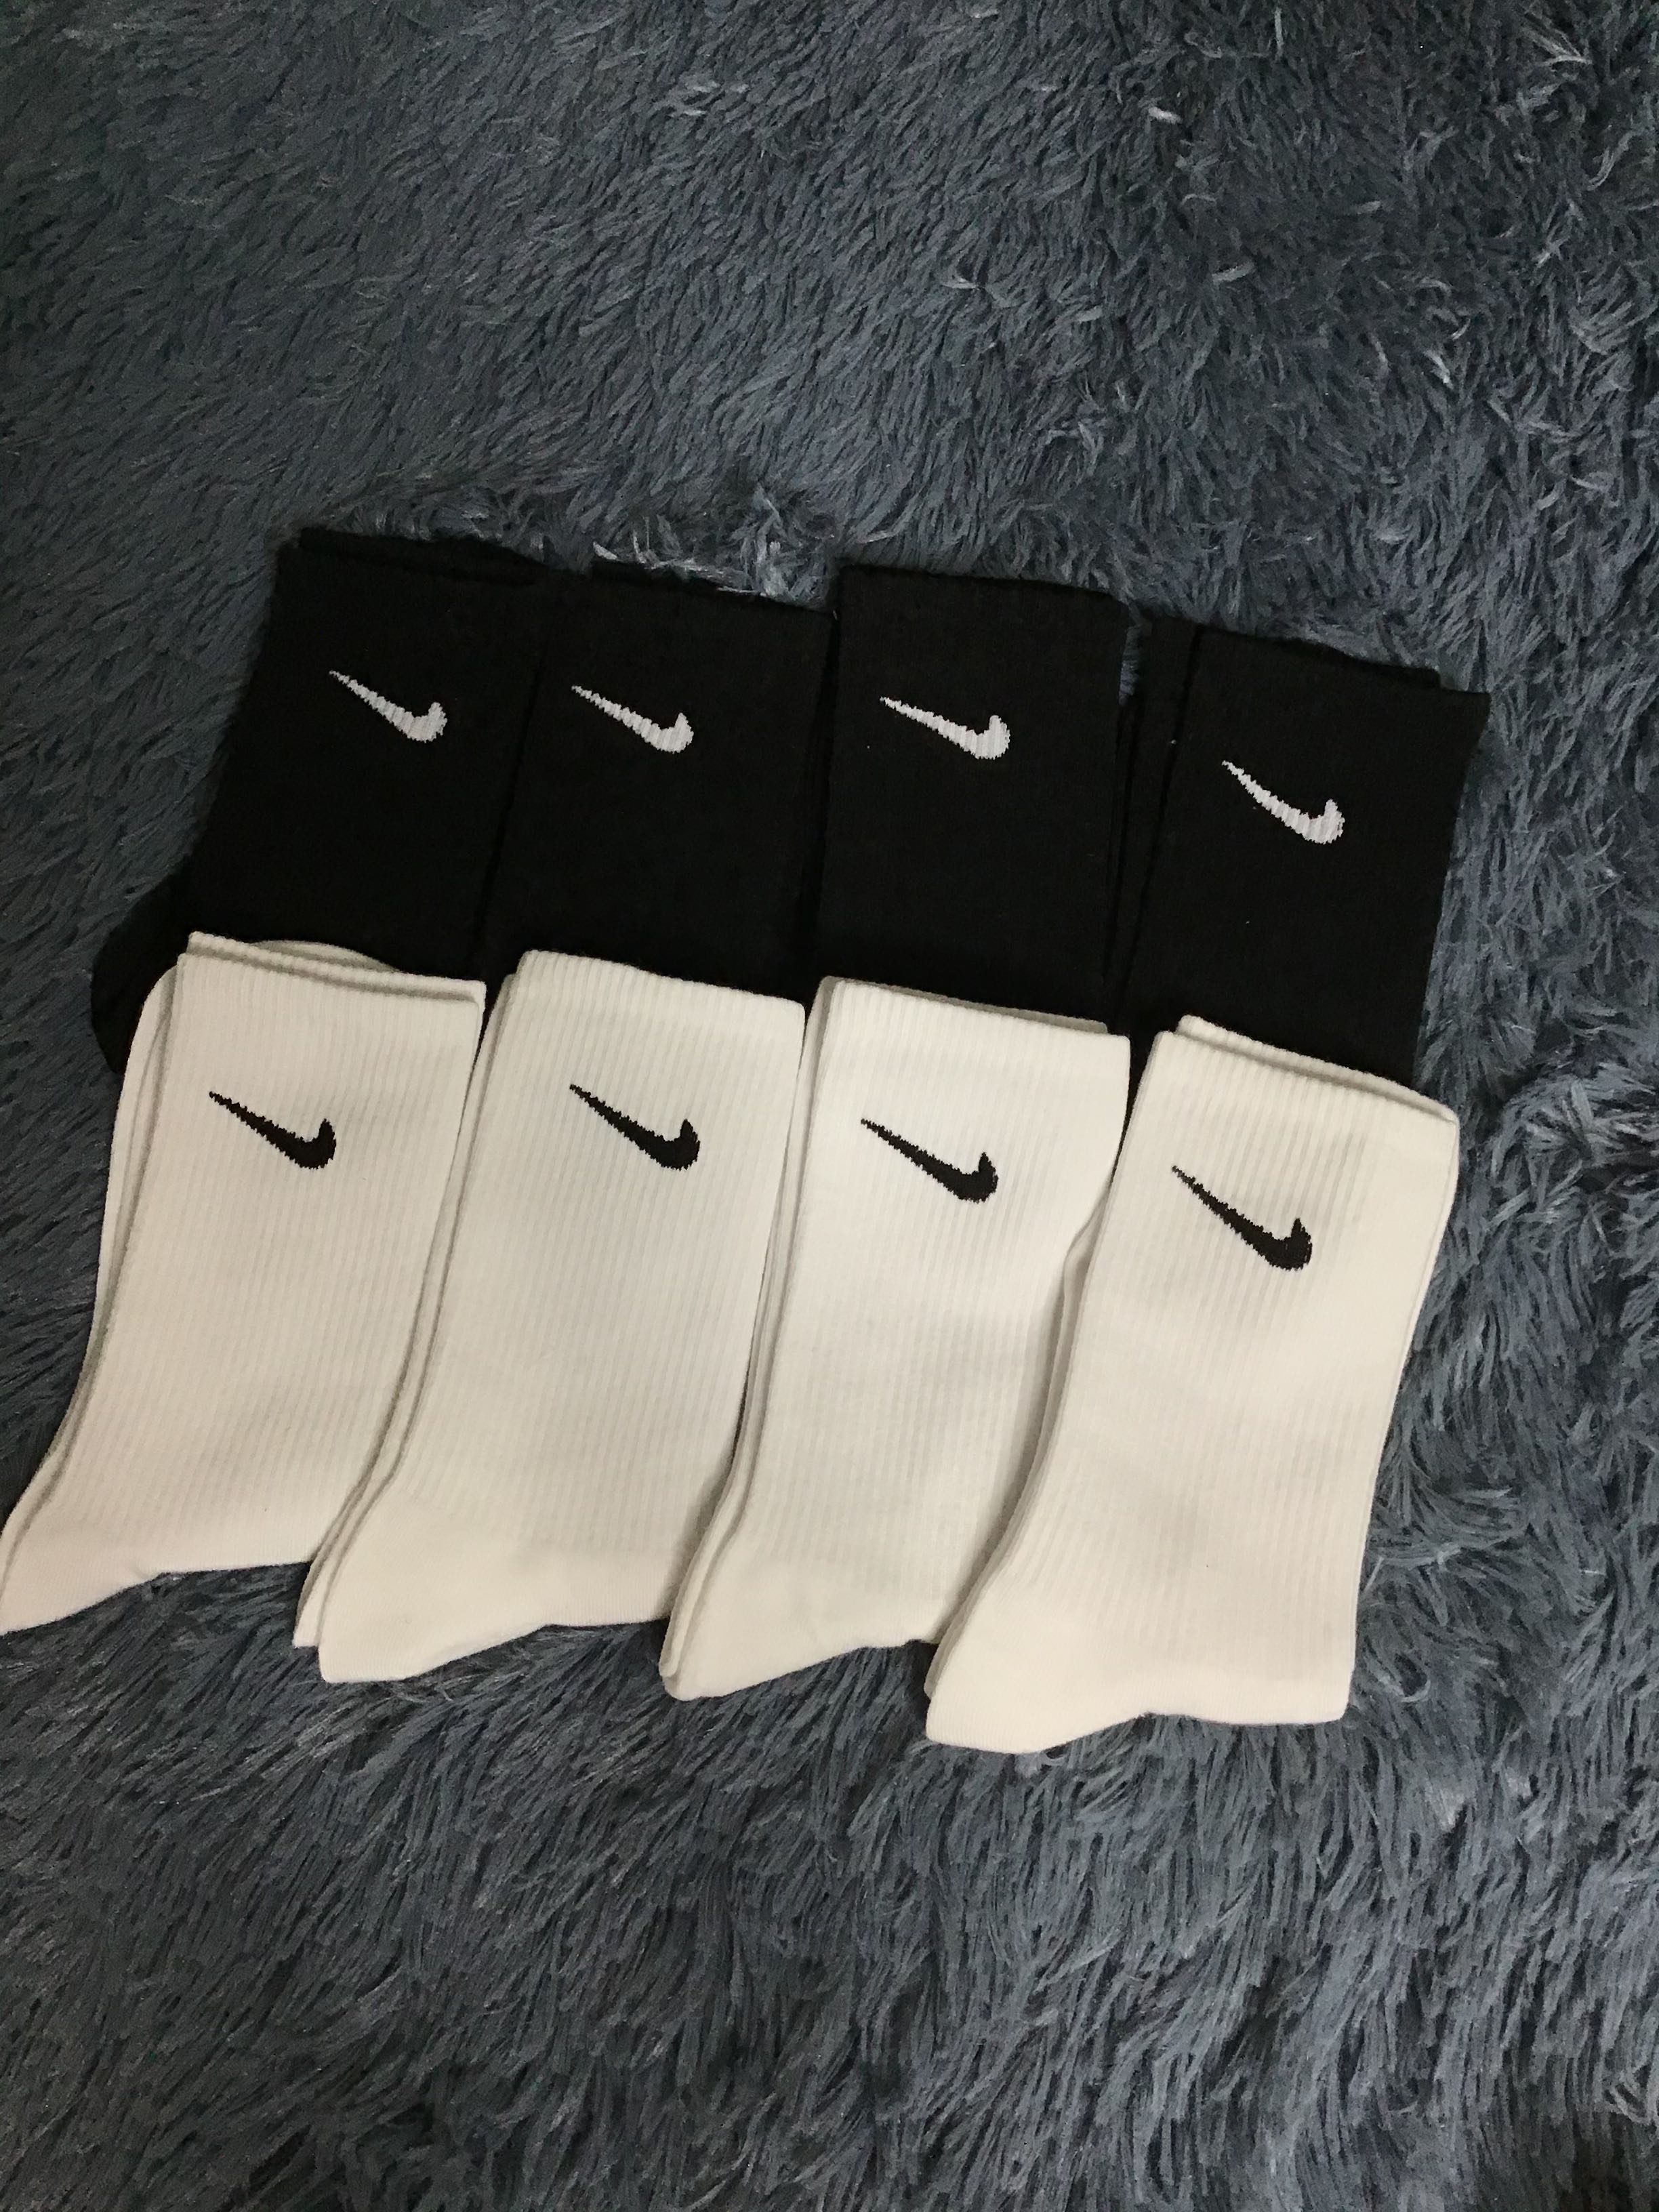 nike socks aesthetic  Nike socks outfit, Socks aesthetic, Nike